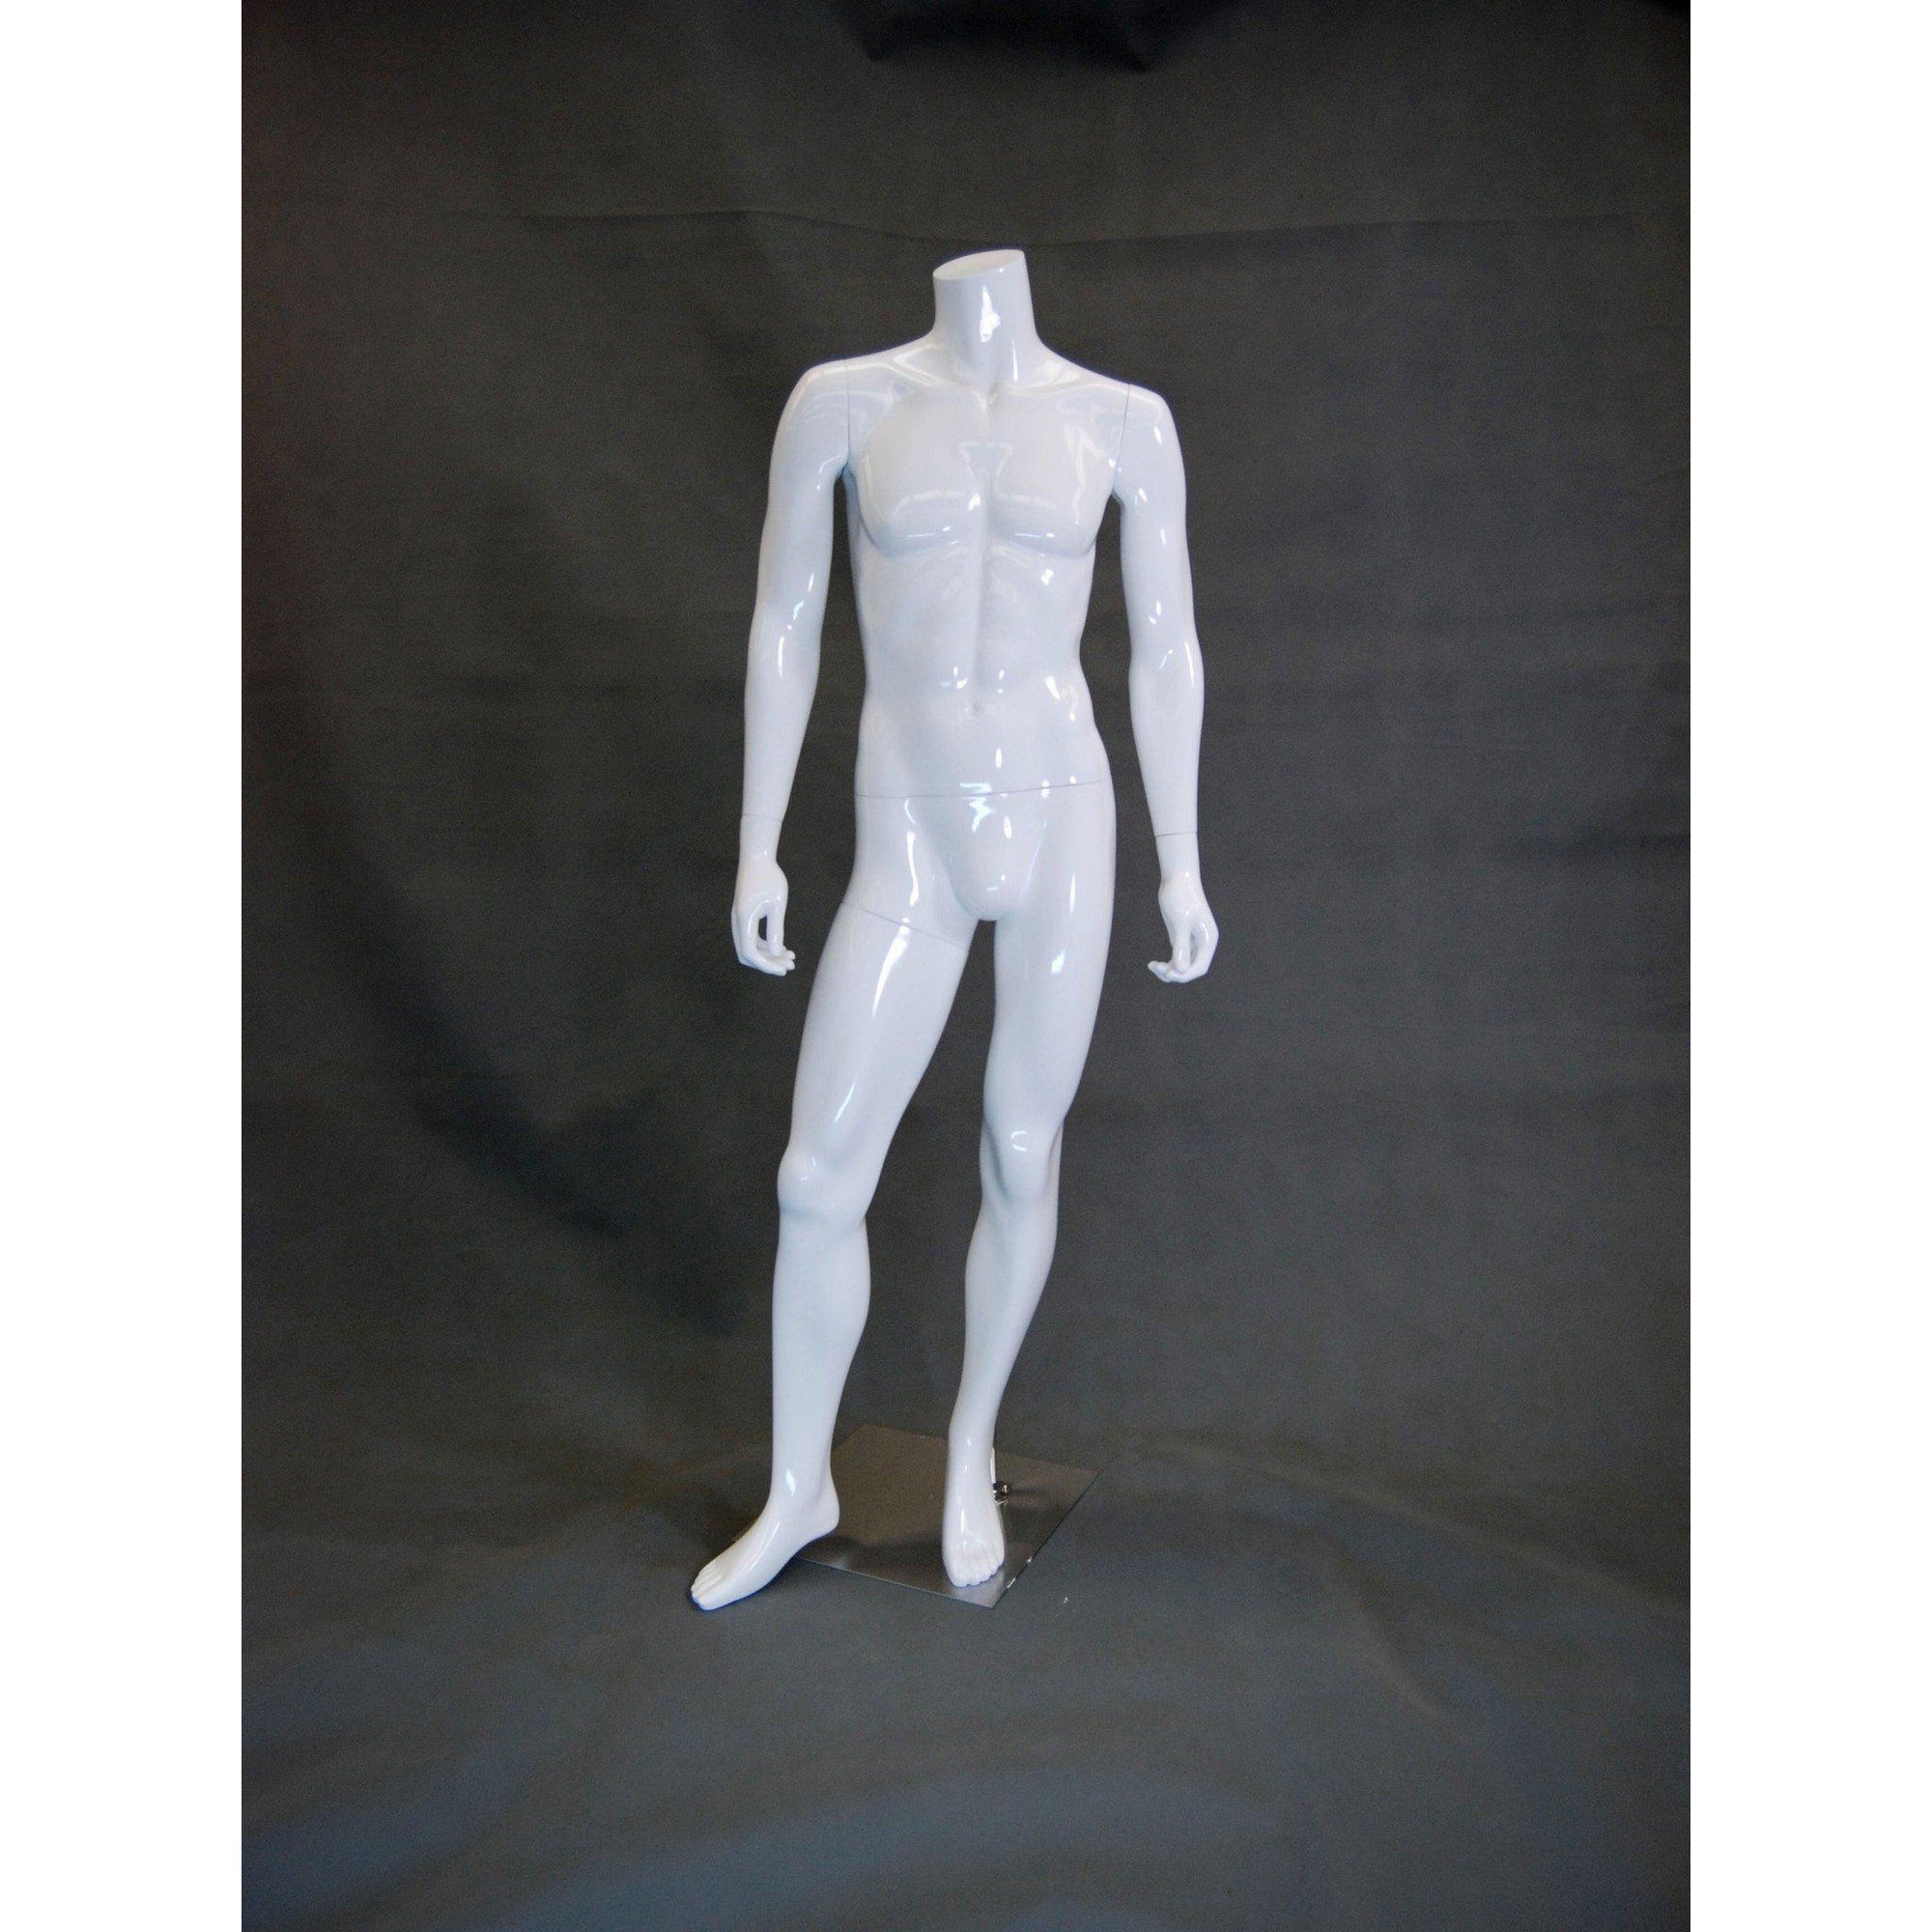 Full Body Headless Mike Series Standing Torso - Mannequin & Clothing From -  Hands on Hip Left Knee Bent - Gloss White Finish